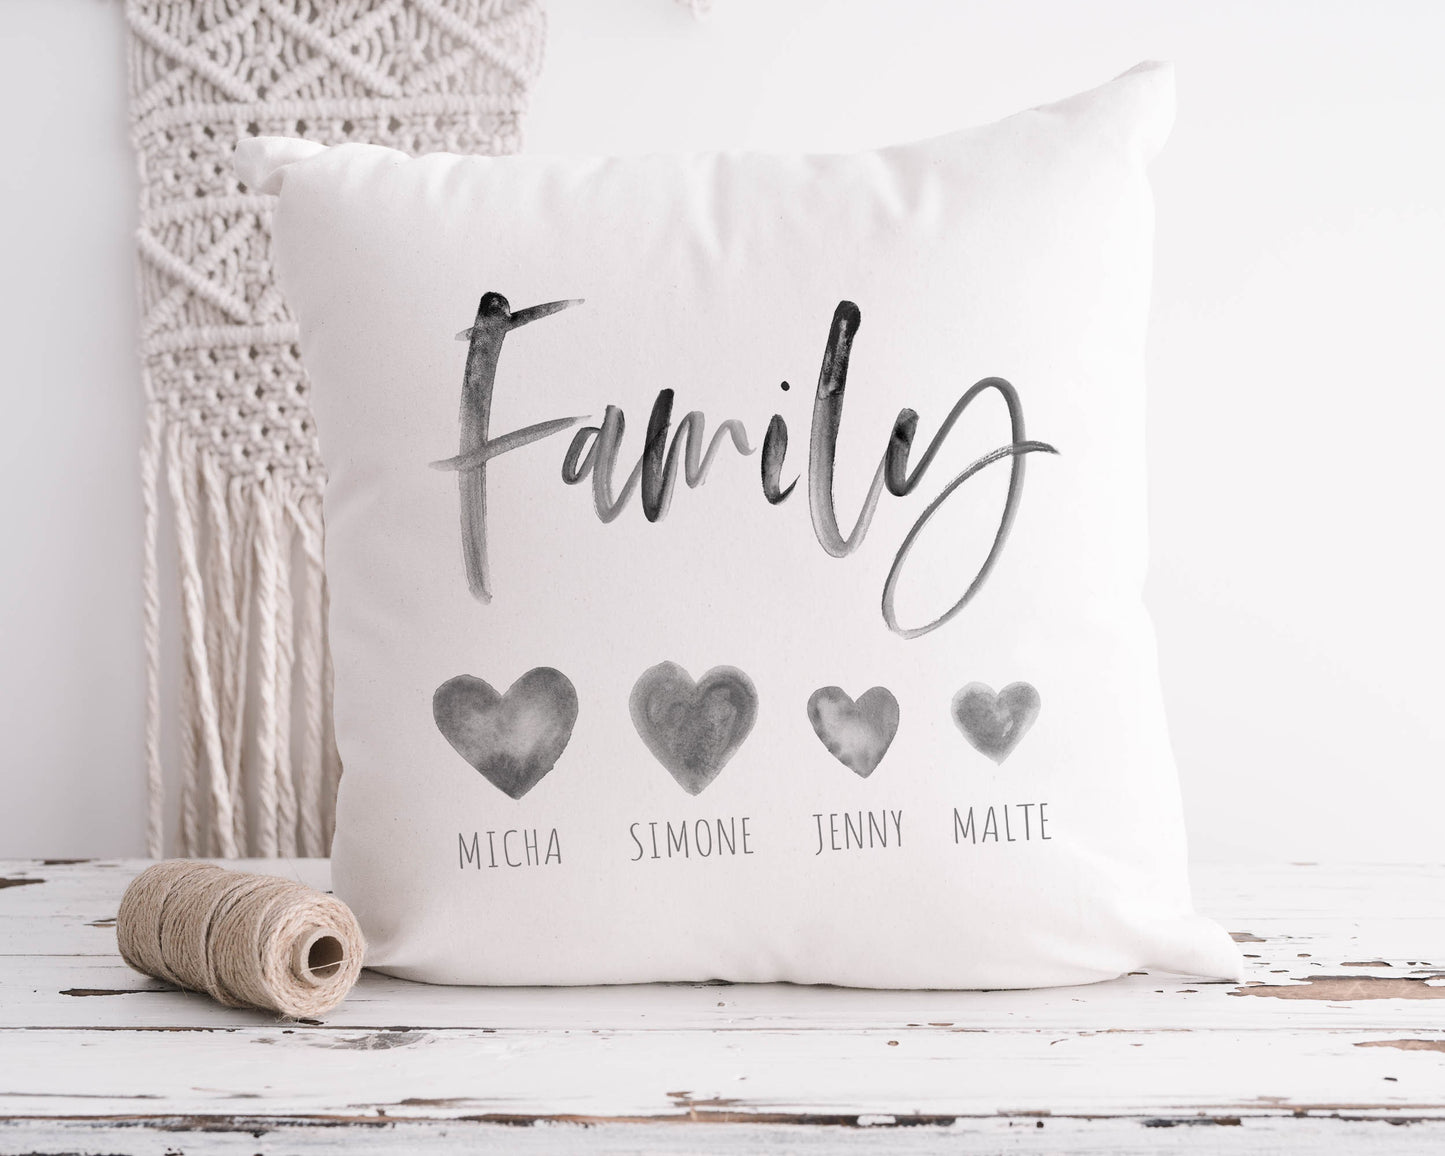 Familie Kissen Personalisiert Family Familienkissen Mit Namen